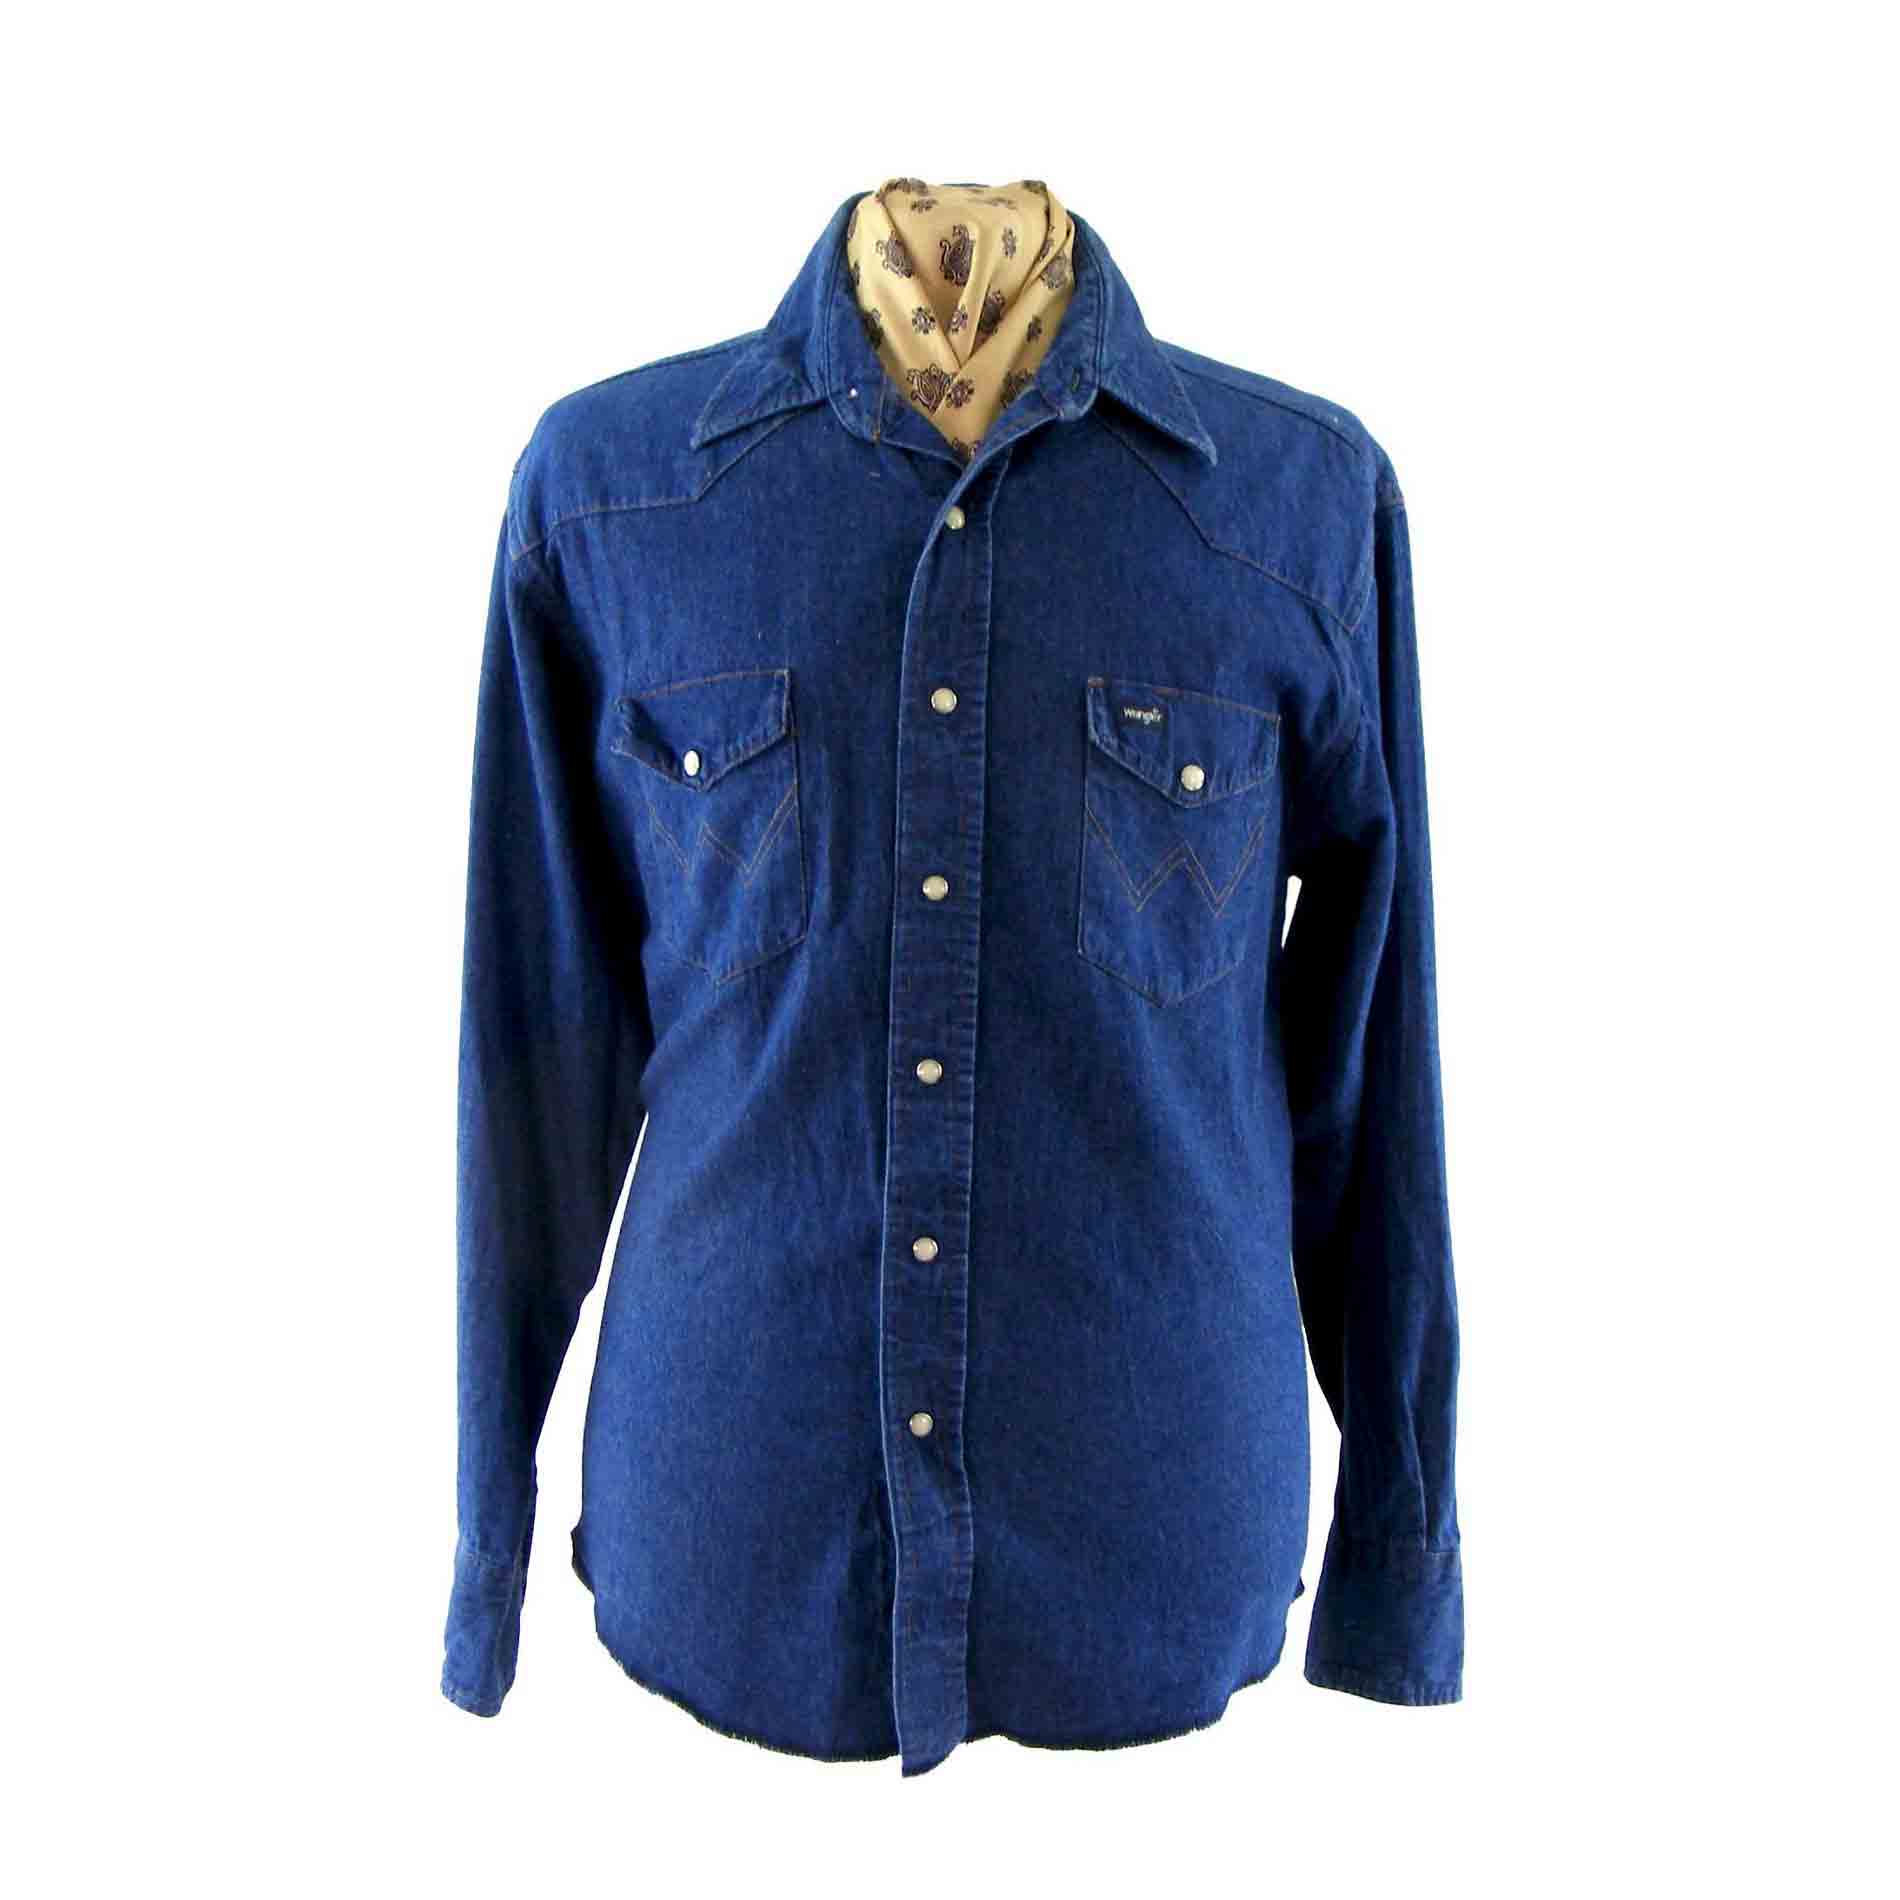 Wrangler Blue Denim Shirt - Vintage Clothing - Blue 17